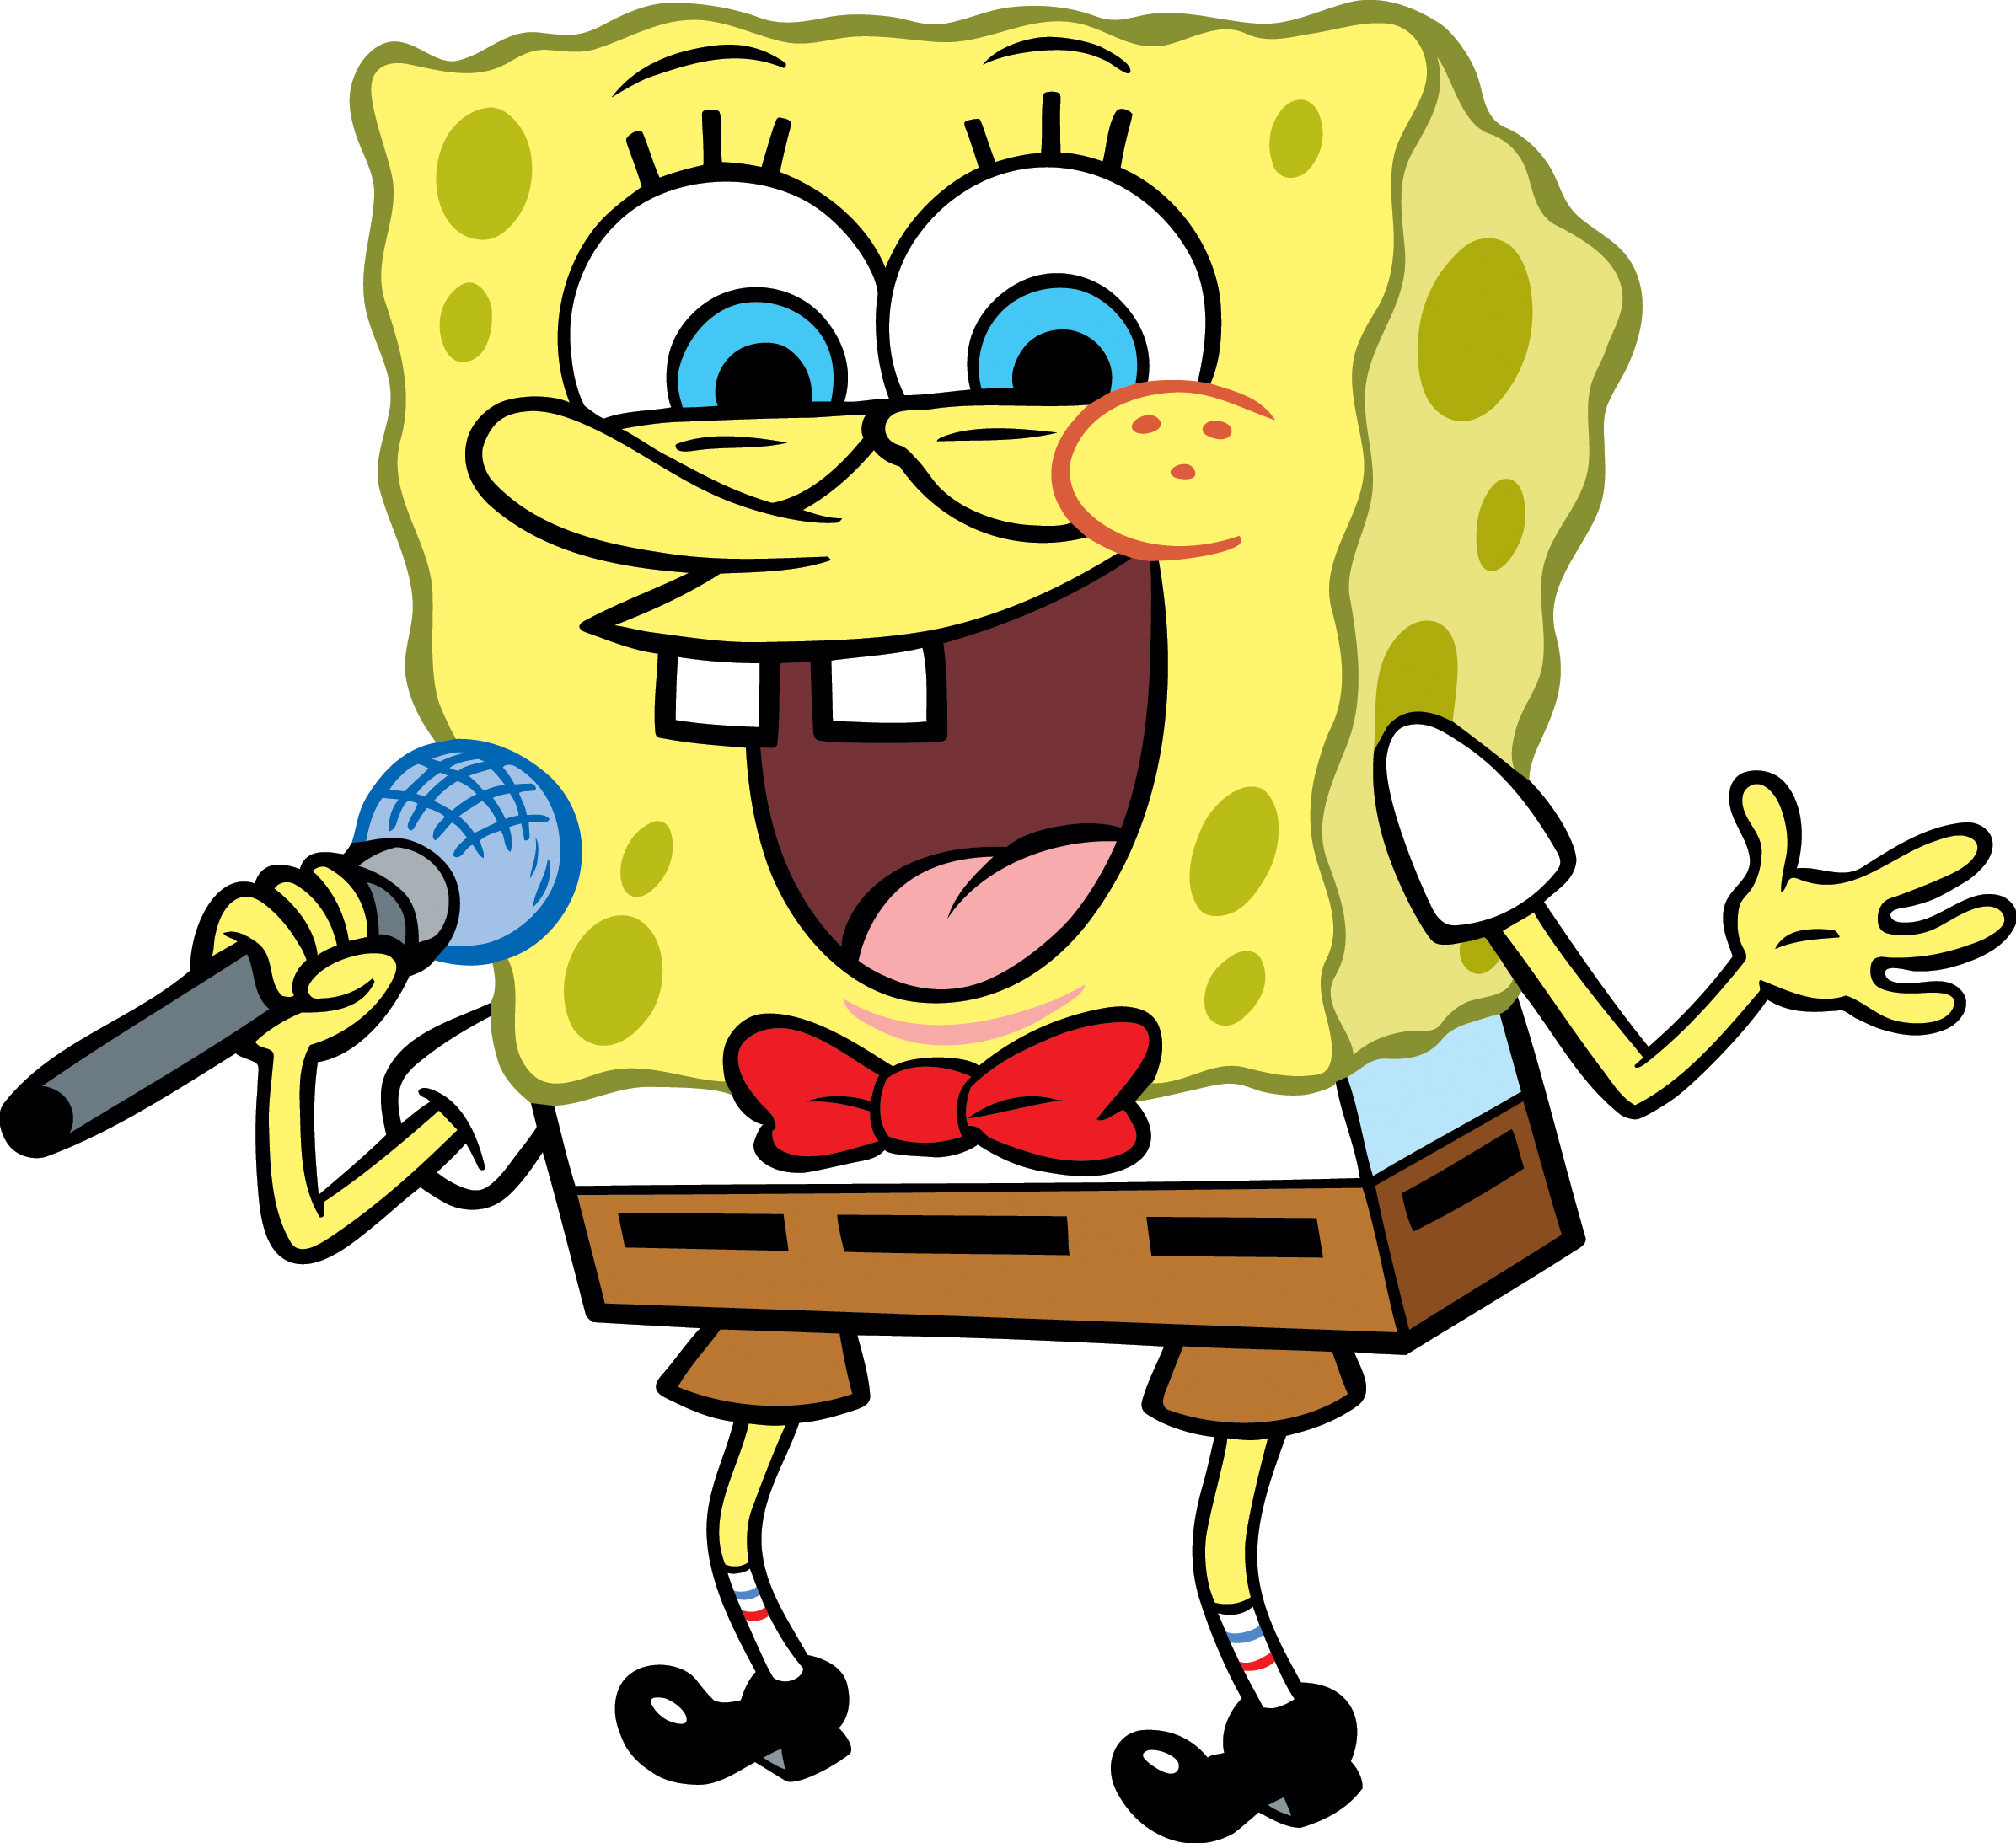 Spongebob-spongebob-squarepants-33210737-2392-2187